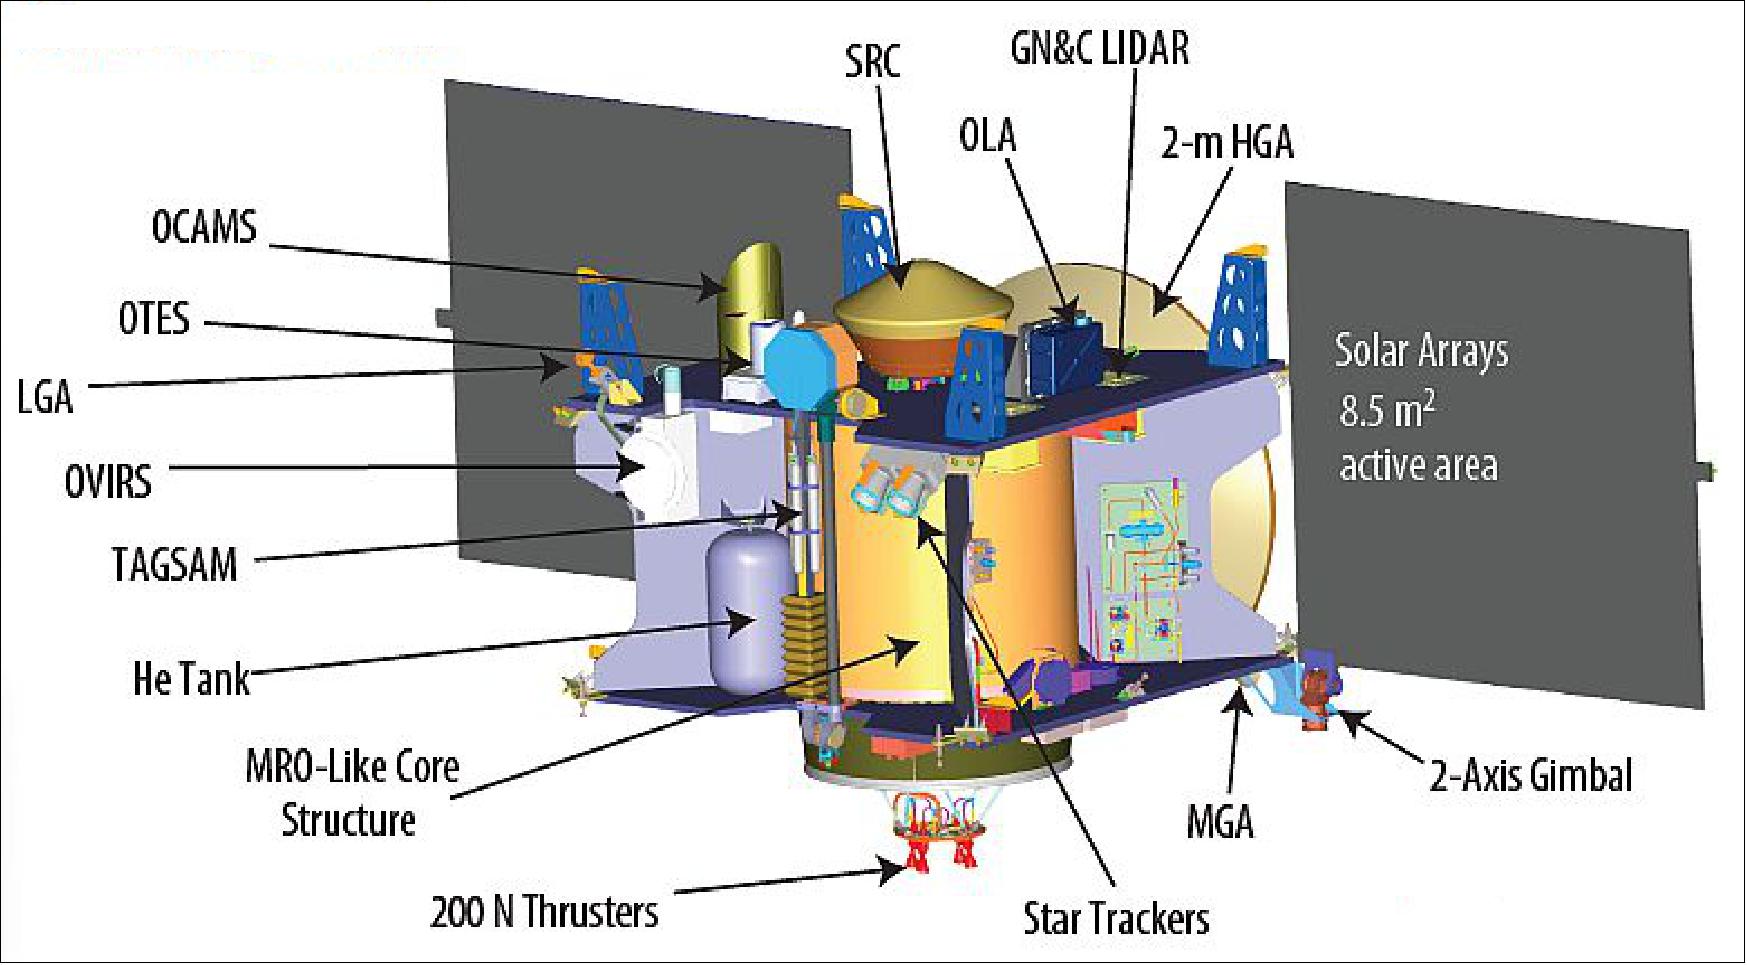 Figure 5: Illustration of the deployed OSIRIS-REx spacecraft components (image credit: NASA)